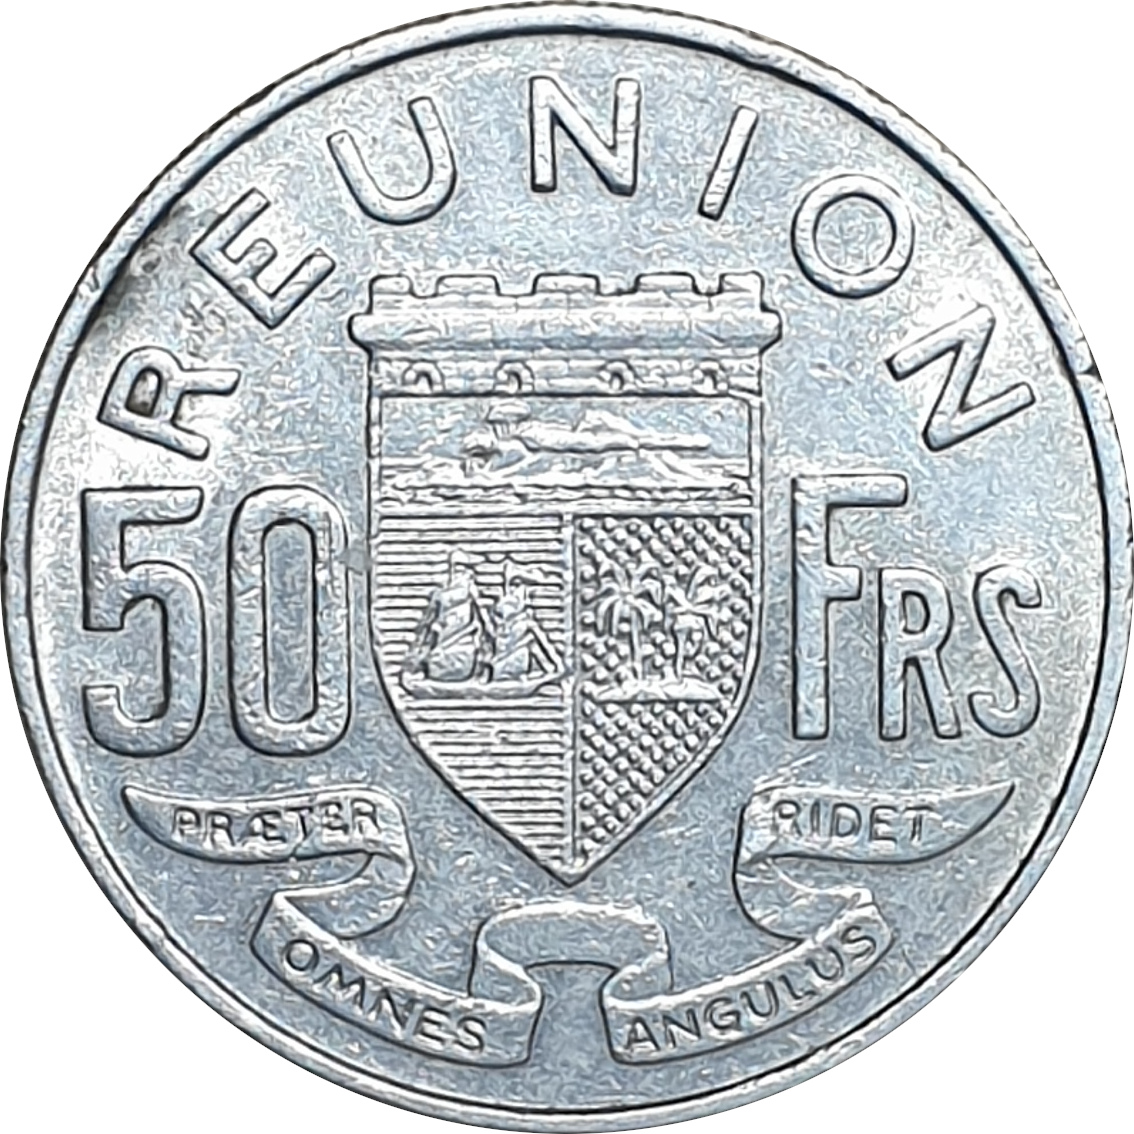 50 francs - Shield